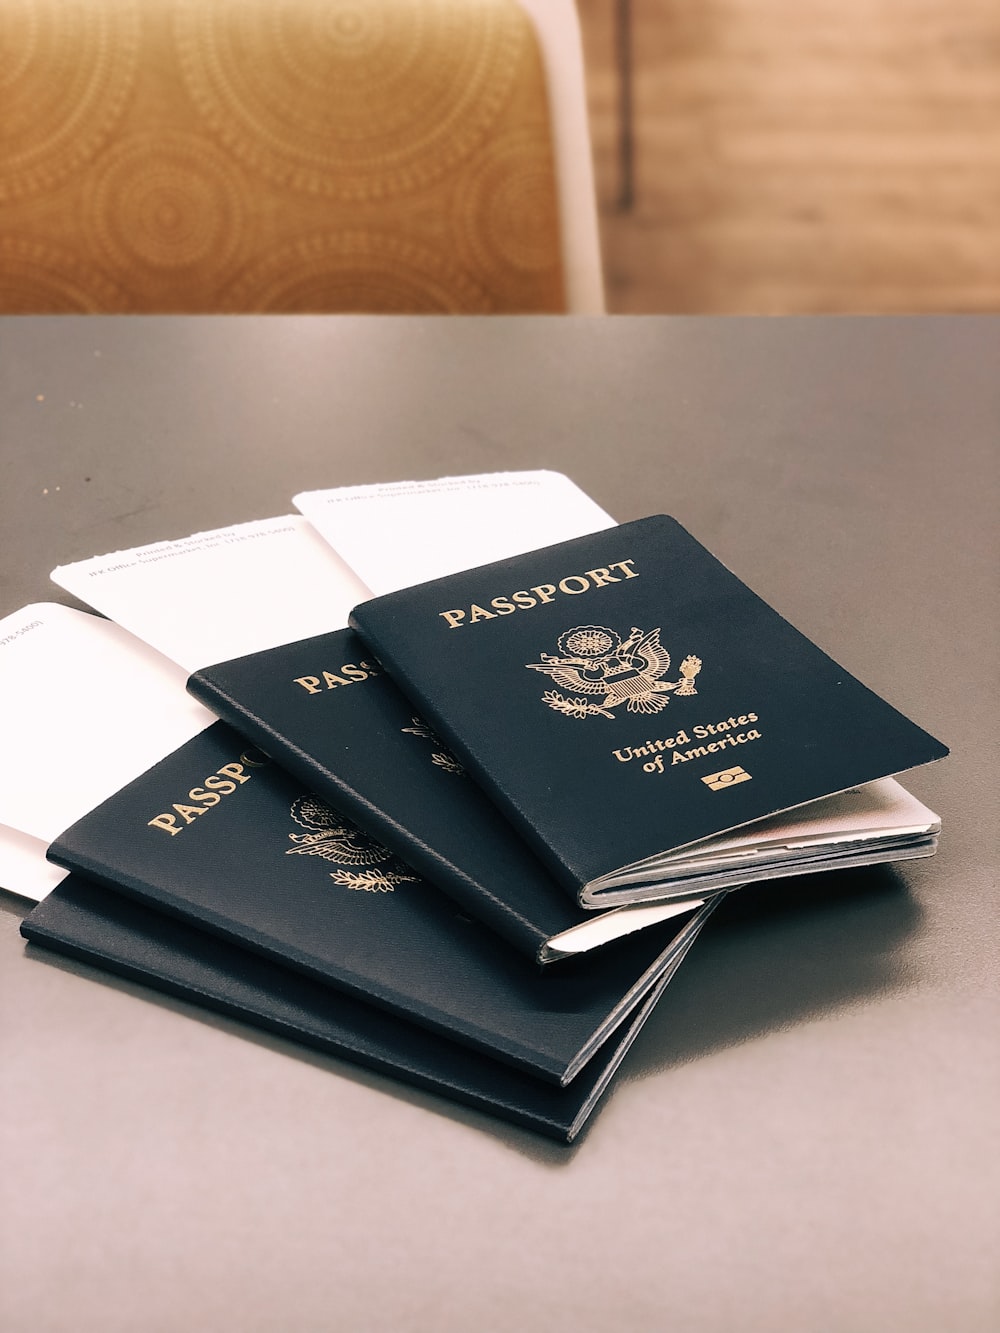 cuatro pasaportes verdes